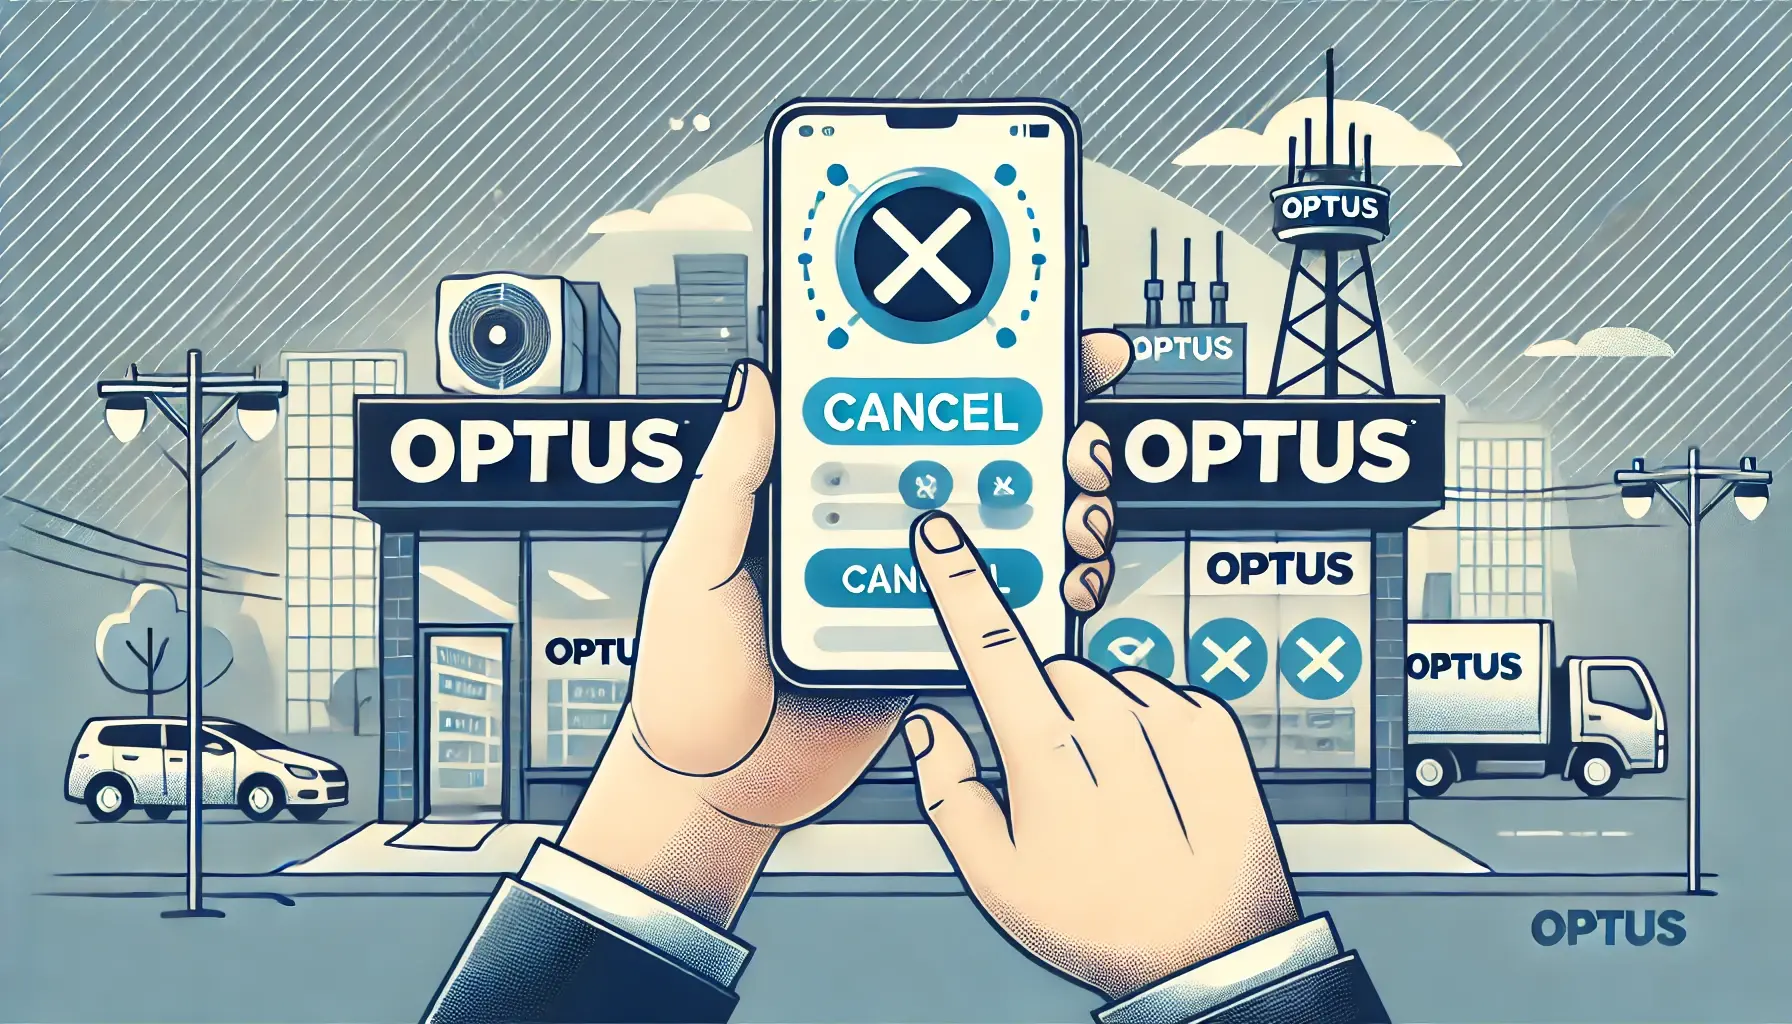 How to Cancel Optus Plan